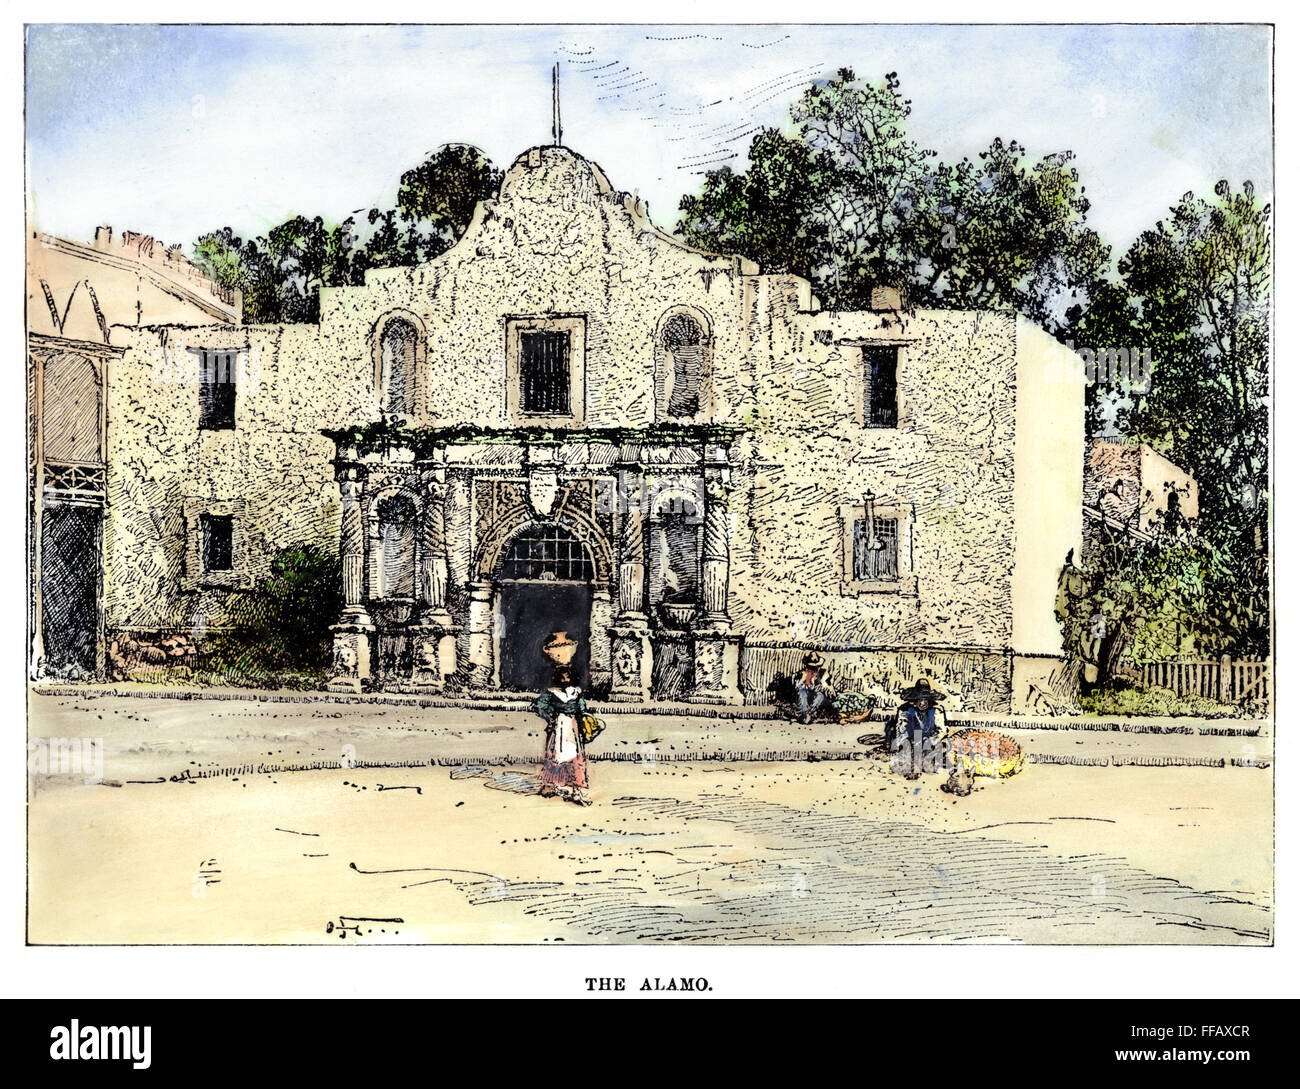 TEXAS: ALAMO, 1900. /nThe Alamo at San Antonio: colored line engraving, c1900. Stock Photo